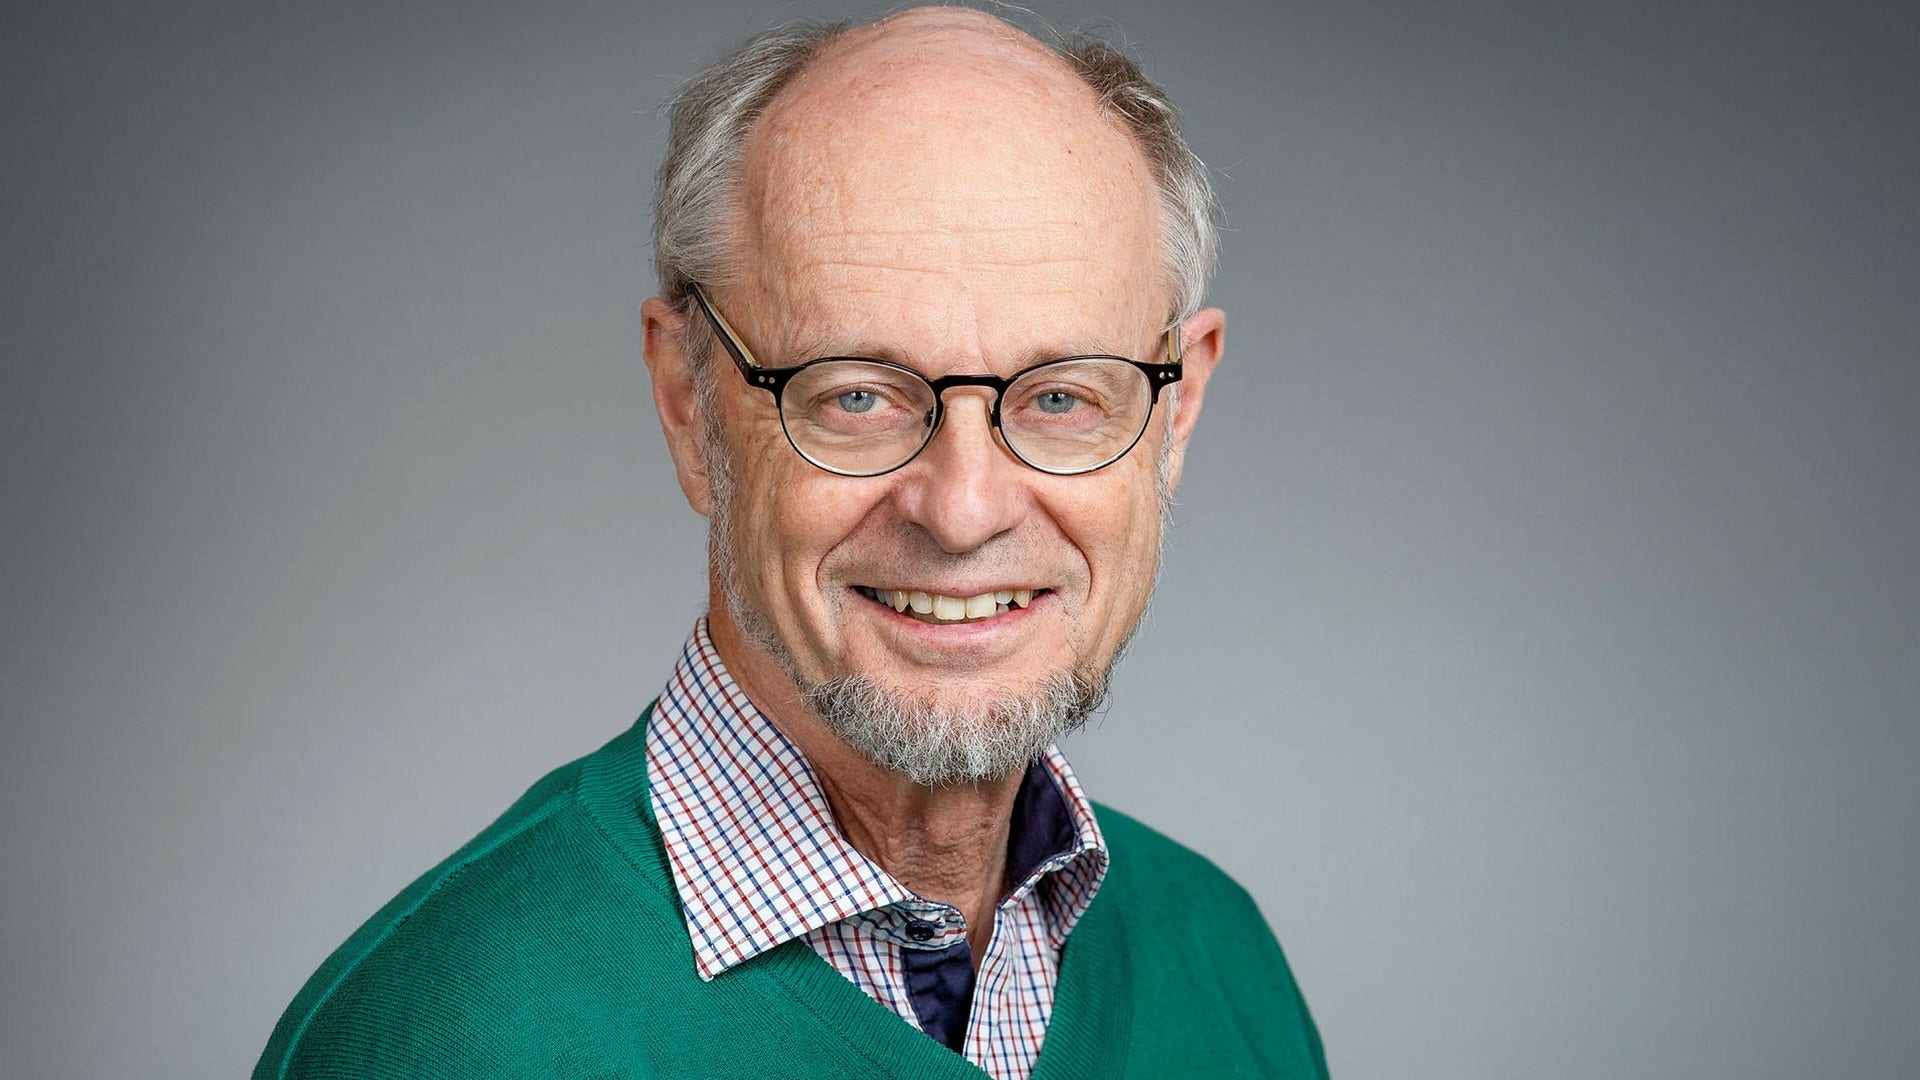 Doctor and professor Bengt Järvolm talks about the sun and skin cancer